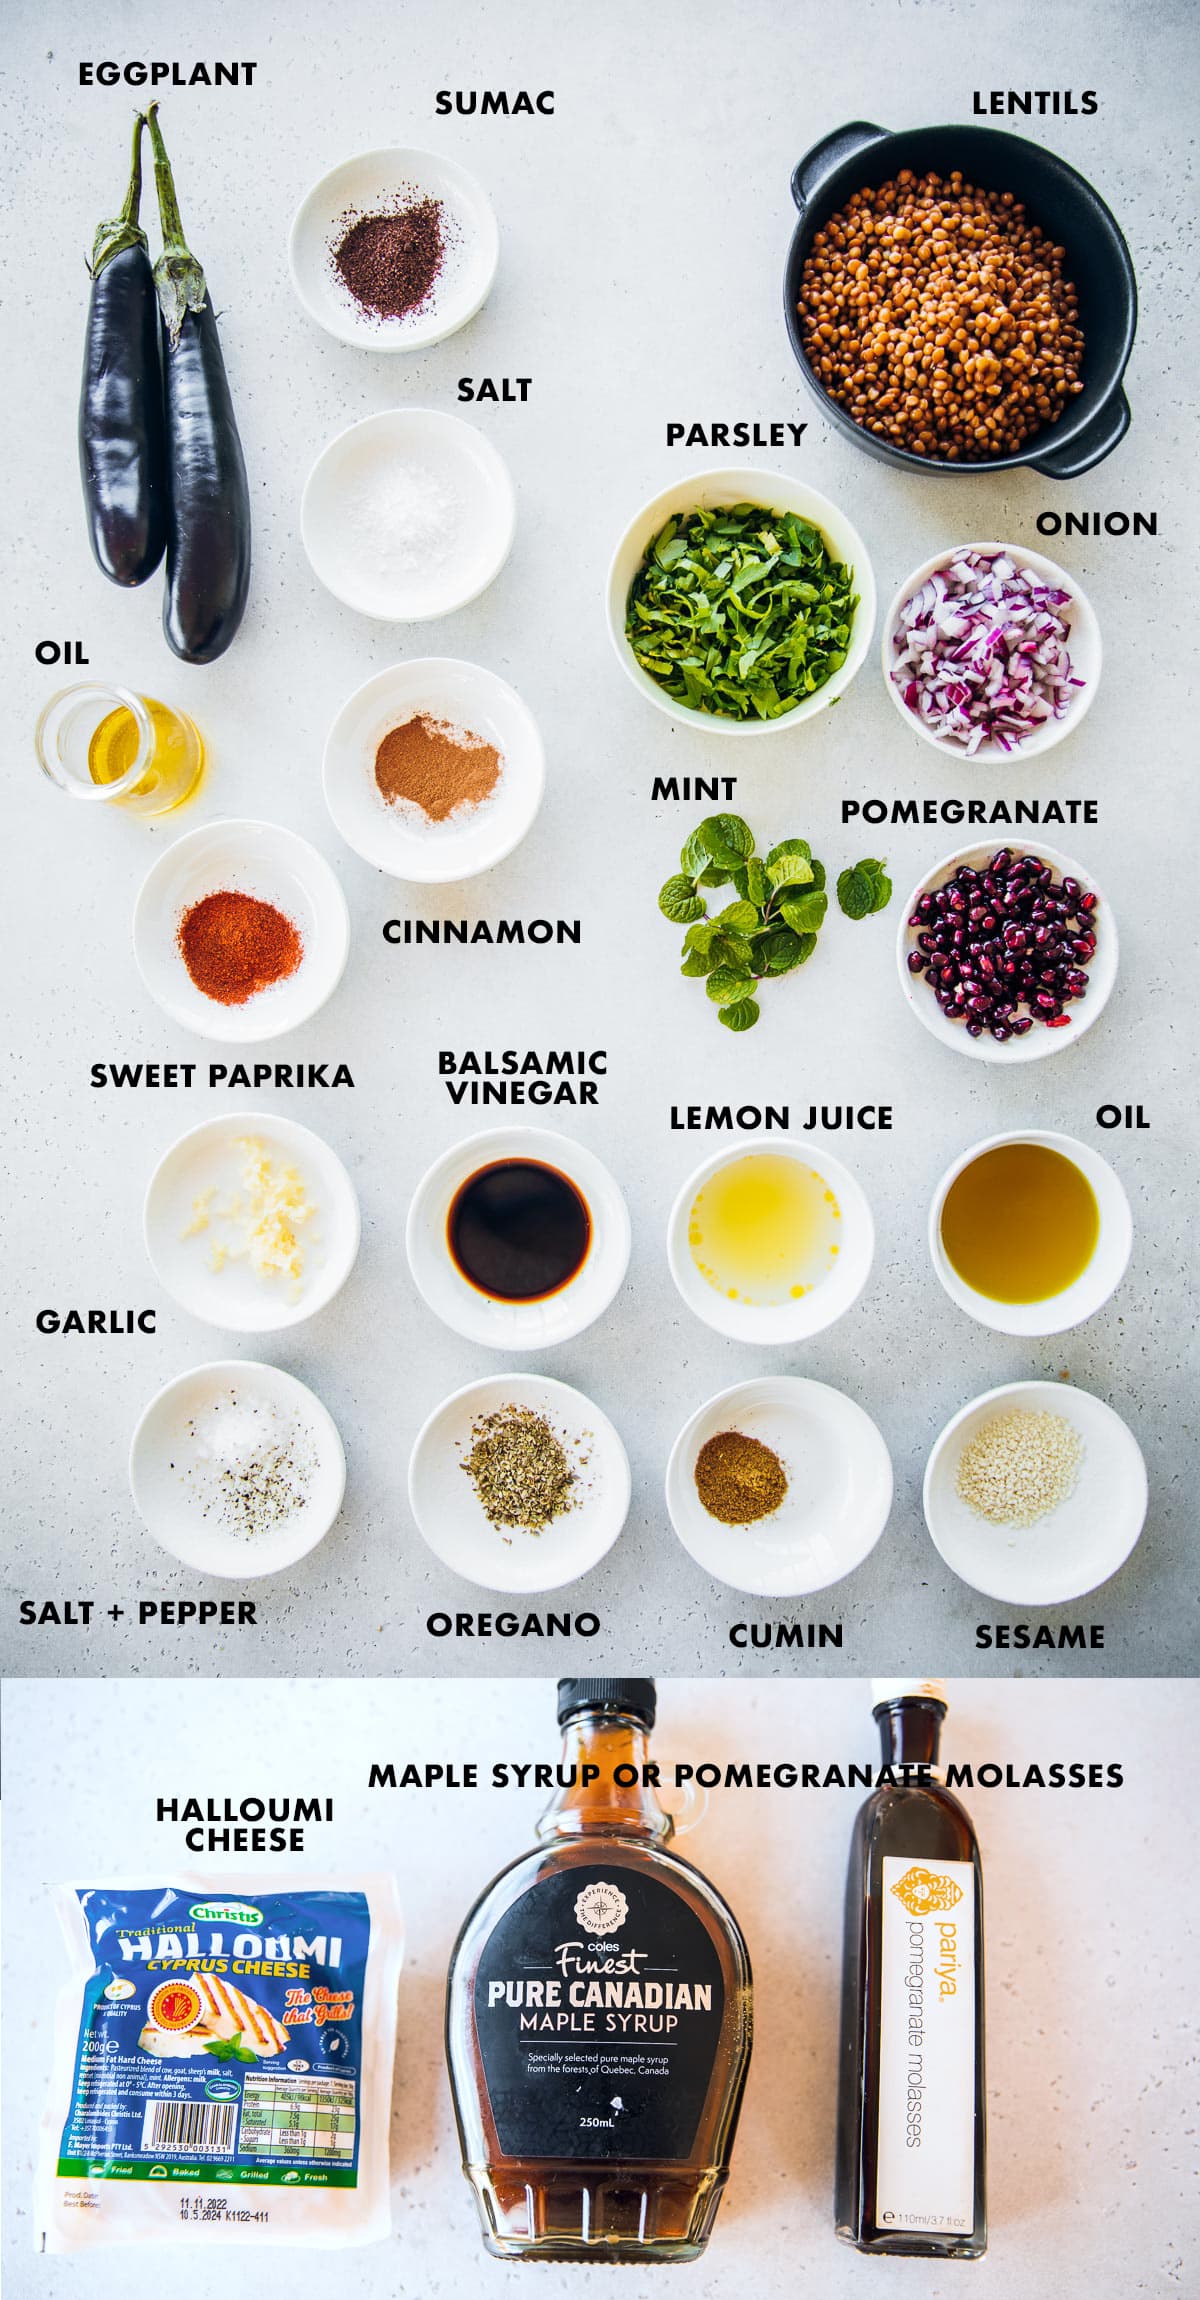 Halloumi Lentil Roasted Eggplant Salad ingredients measured and labeled - eggplant, onion, pomegranate, parsley, mint, lentils, sumac, paprika, cinnamon, garlic, oregano, cumin, lemon, balsamic vinegar, sesame, olive oil, salt, pepper and pomegranate molasses.